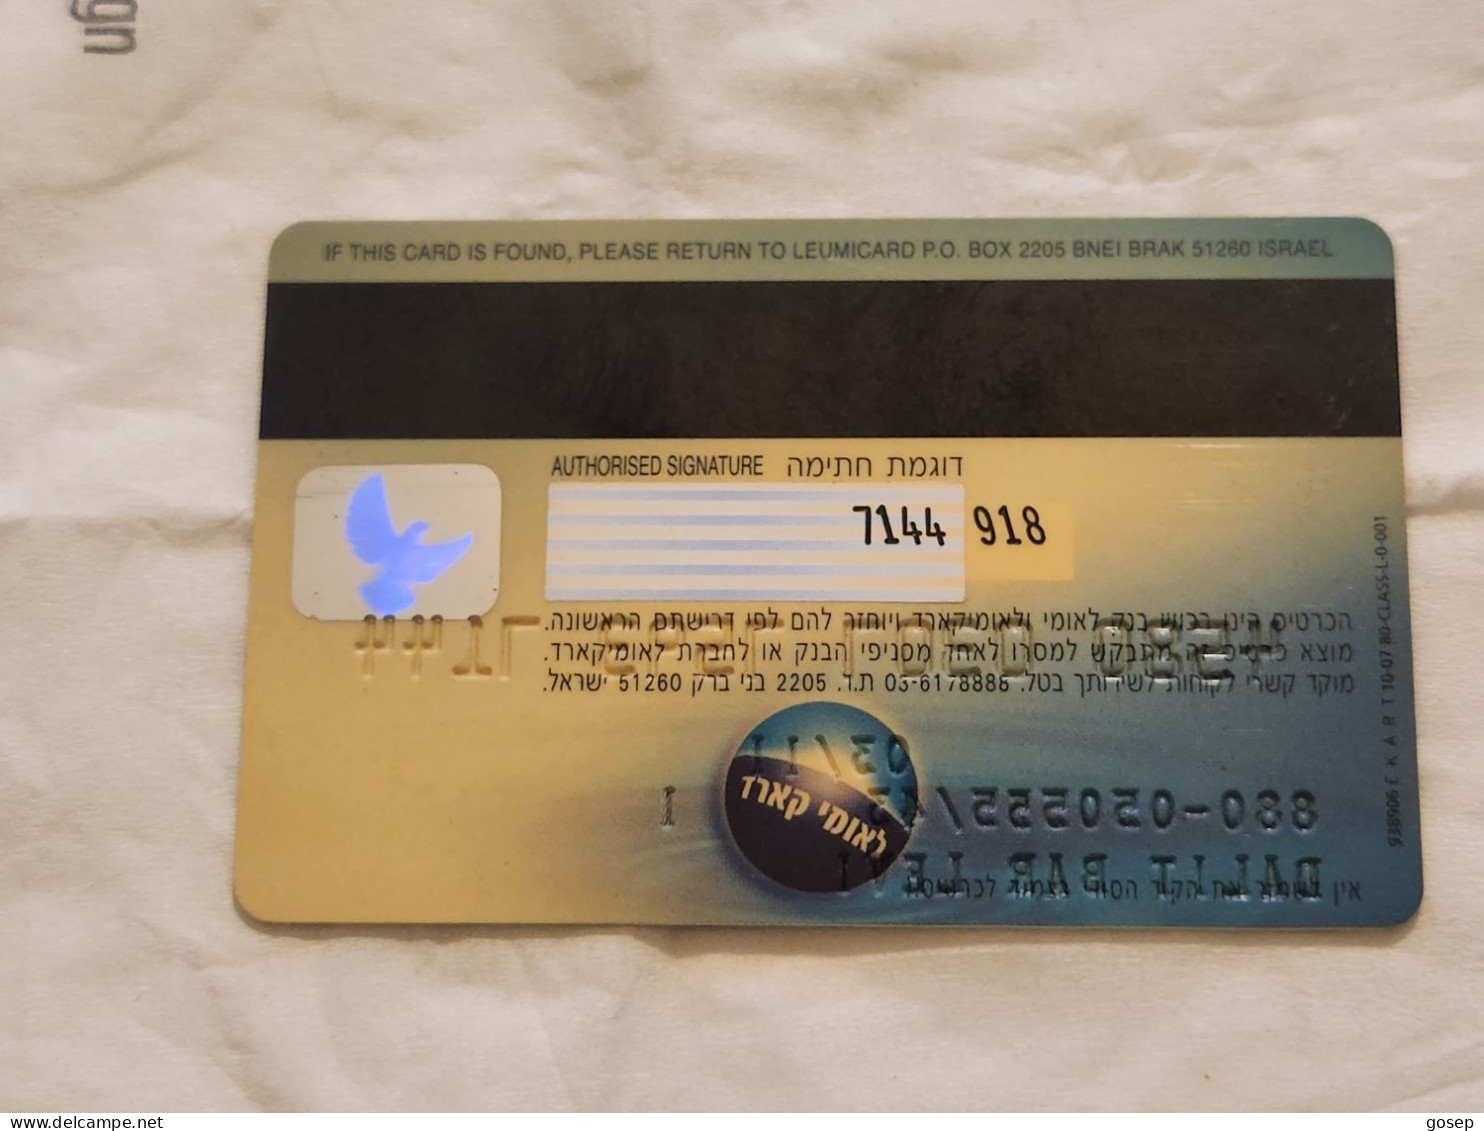 ISRAEL-VISA-BANK LEUMI-(4580-0307-7593-7144)-(03/2011)-used Card - Credit Cards (Exp. Date Min. 10 Years)